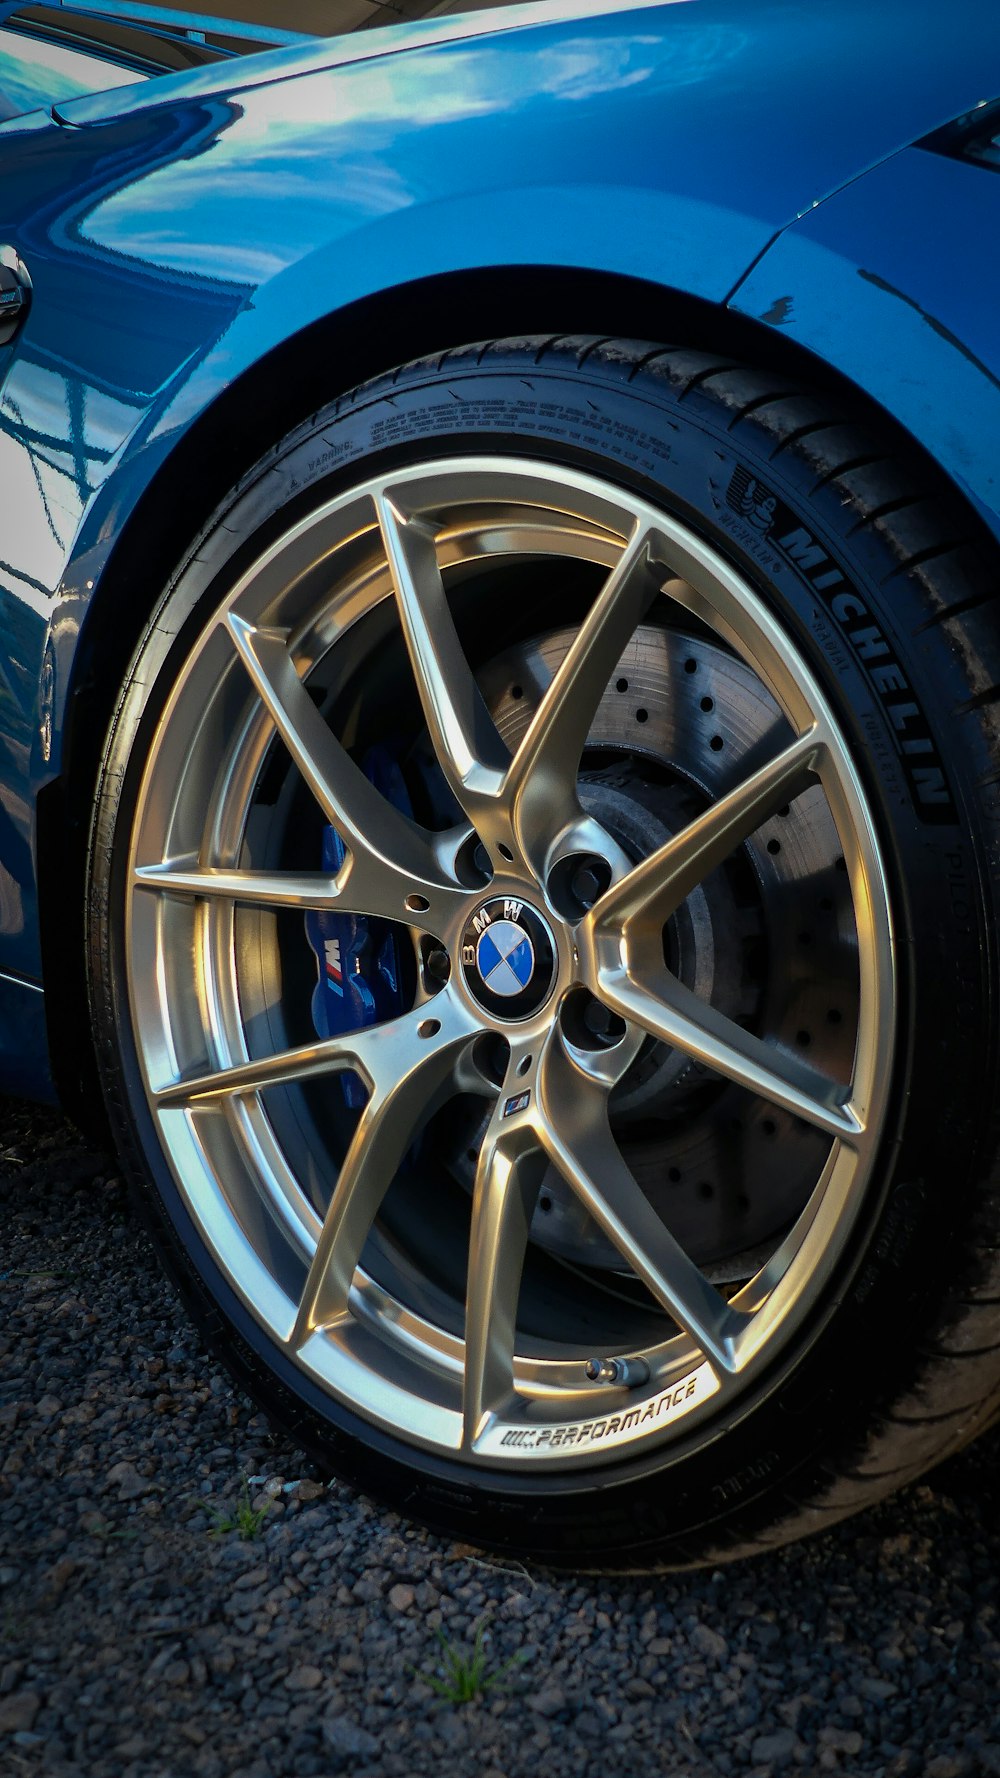 a close up of a blue sports car tire